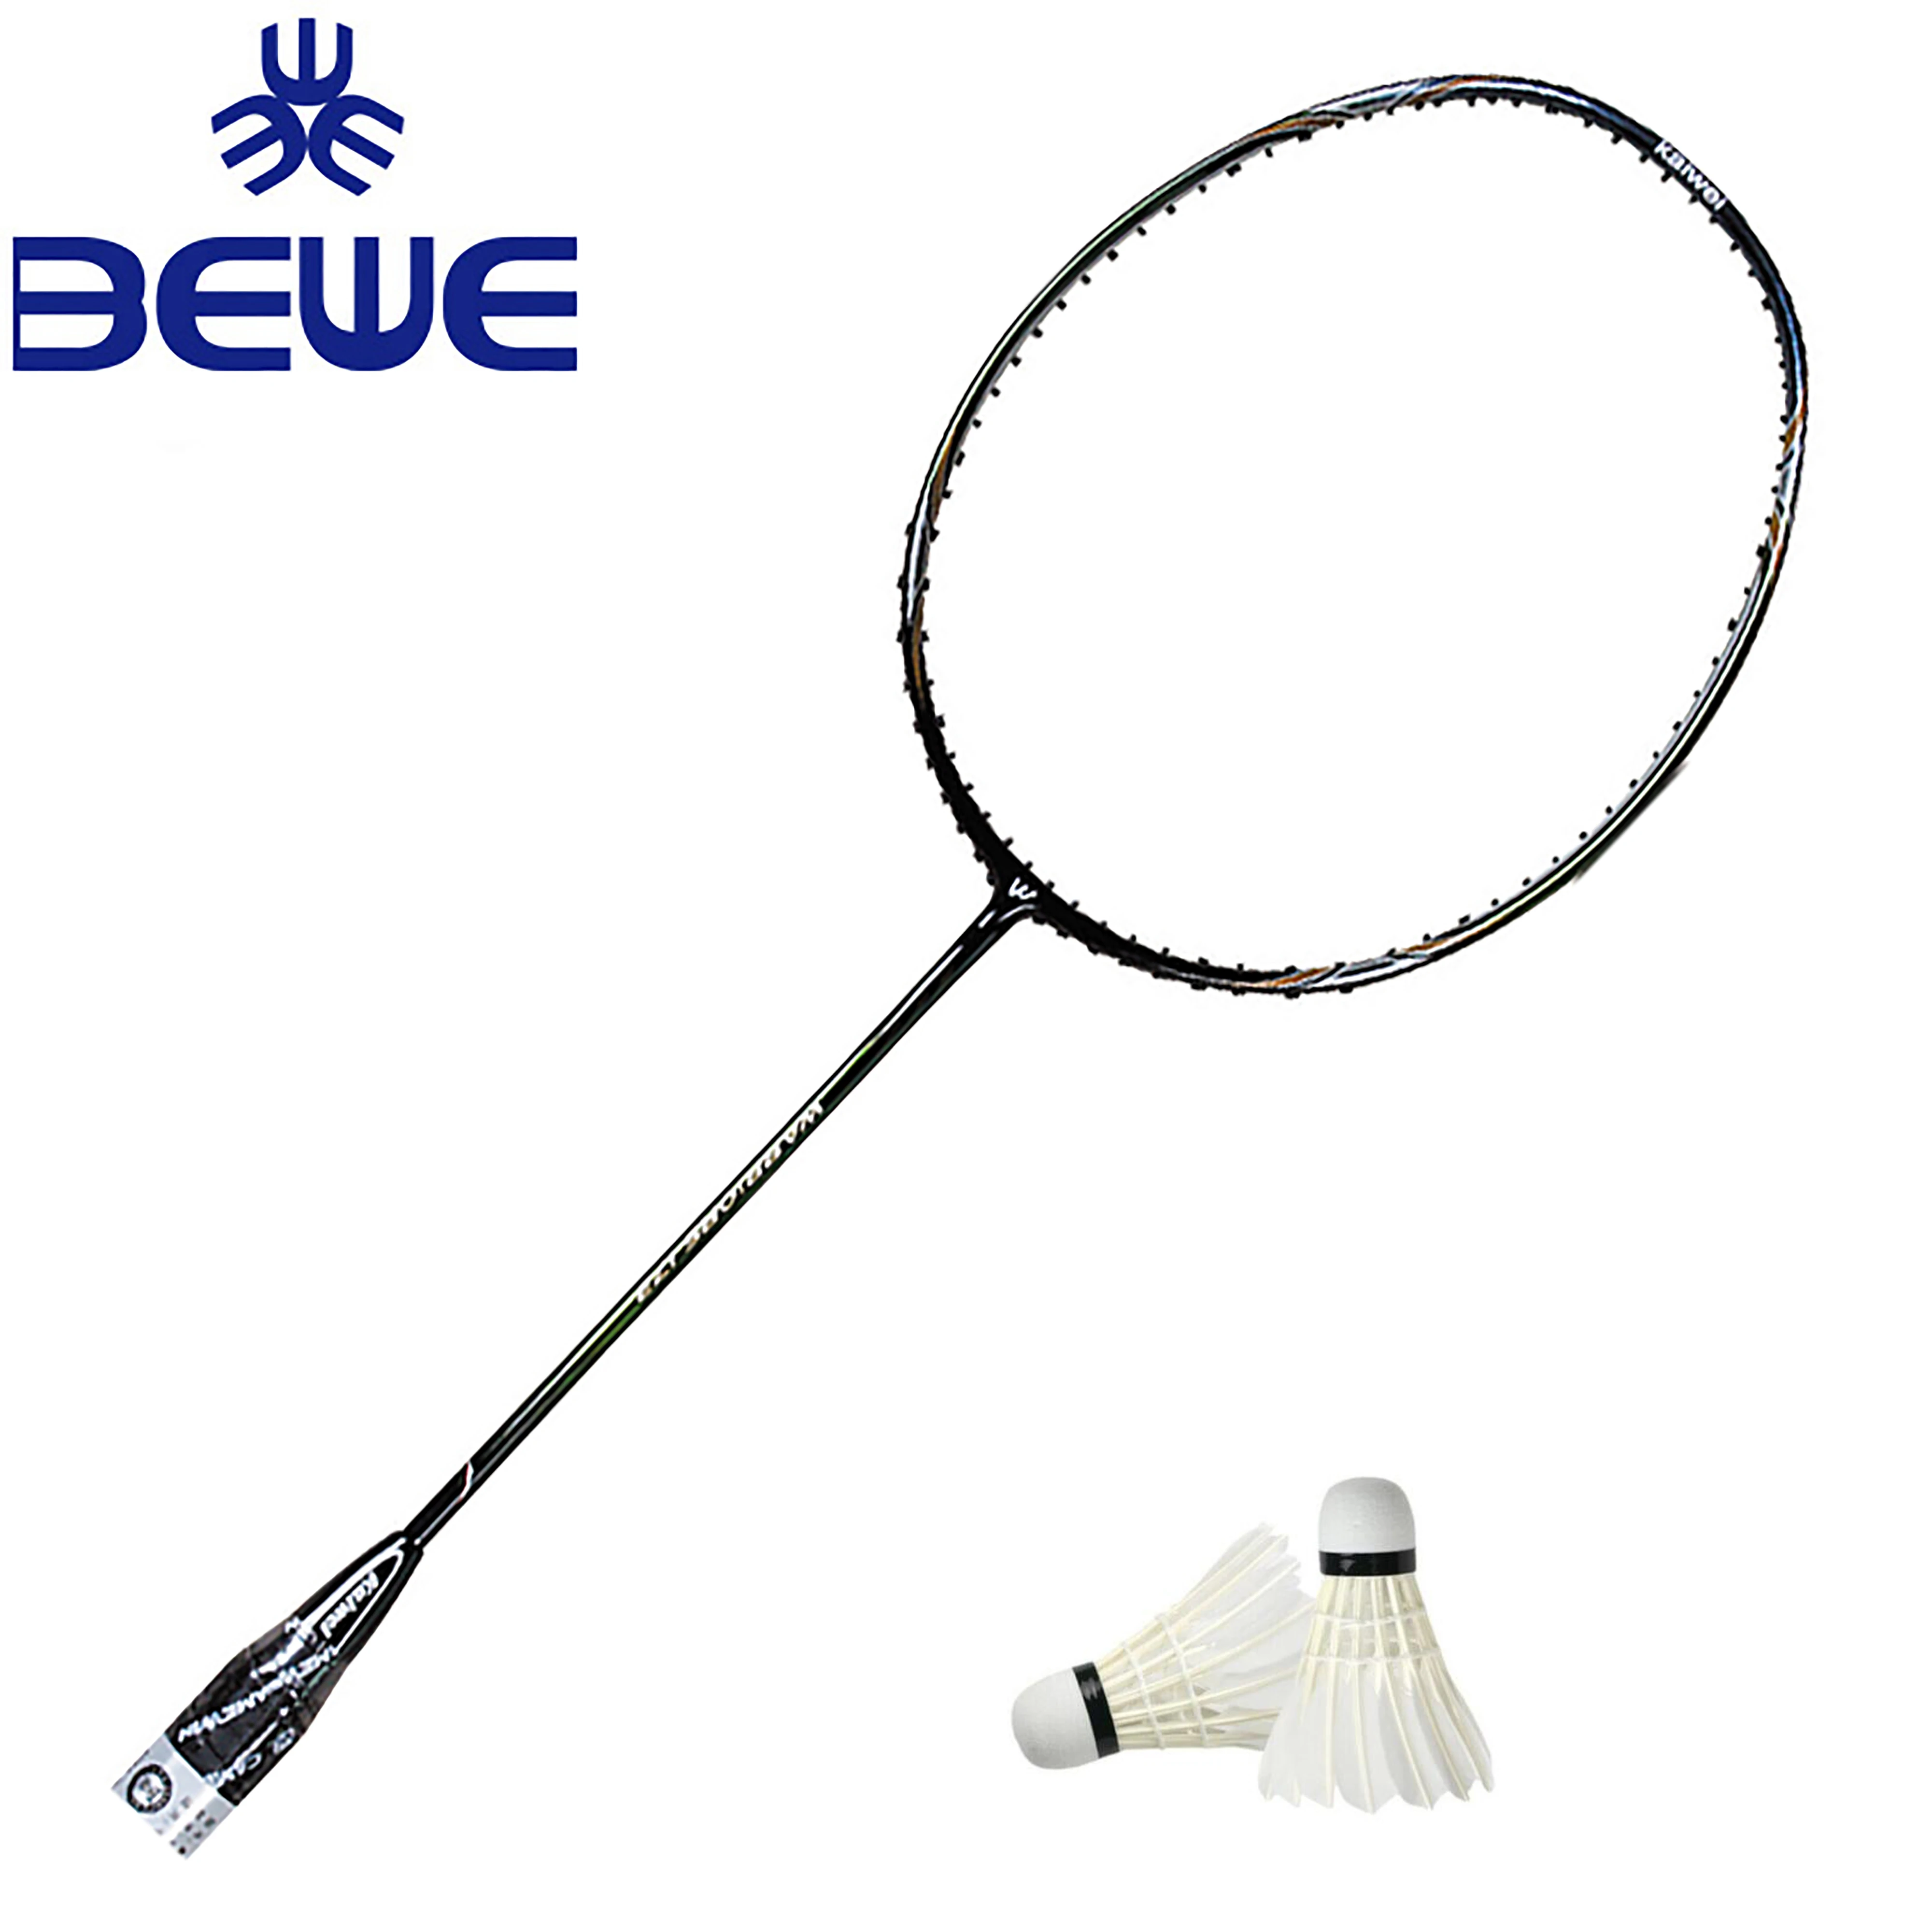 Source Wholesale Best Flexible OEM Badminton Racket With PU Grip on m.alibaba